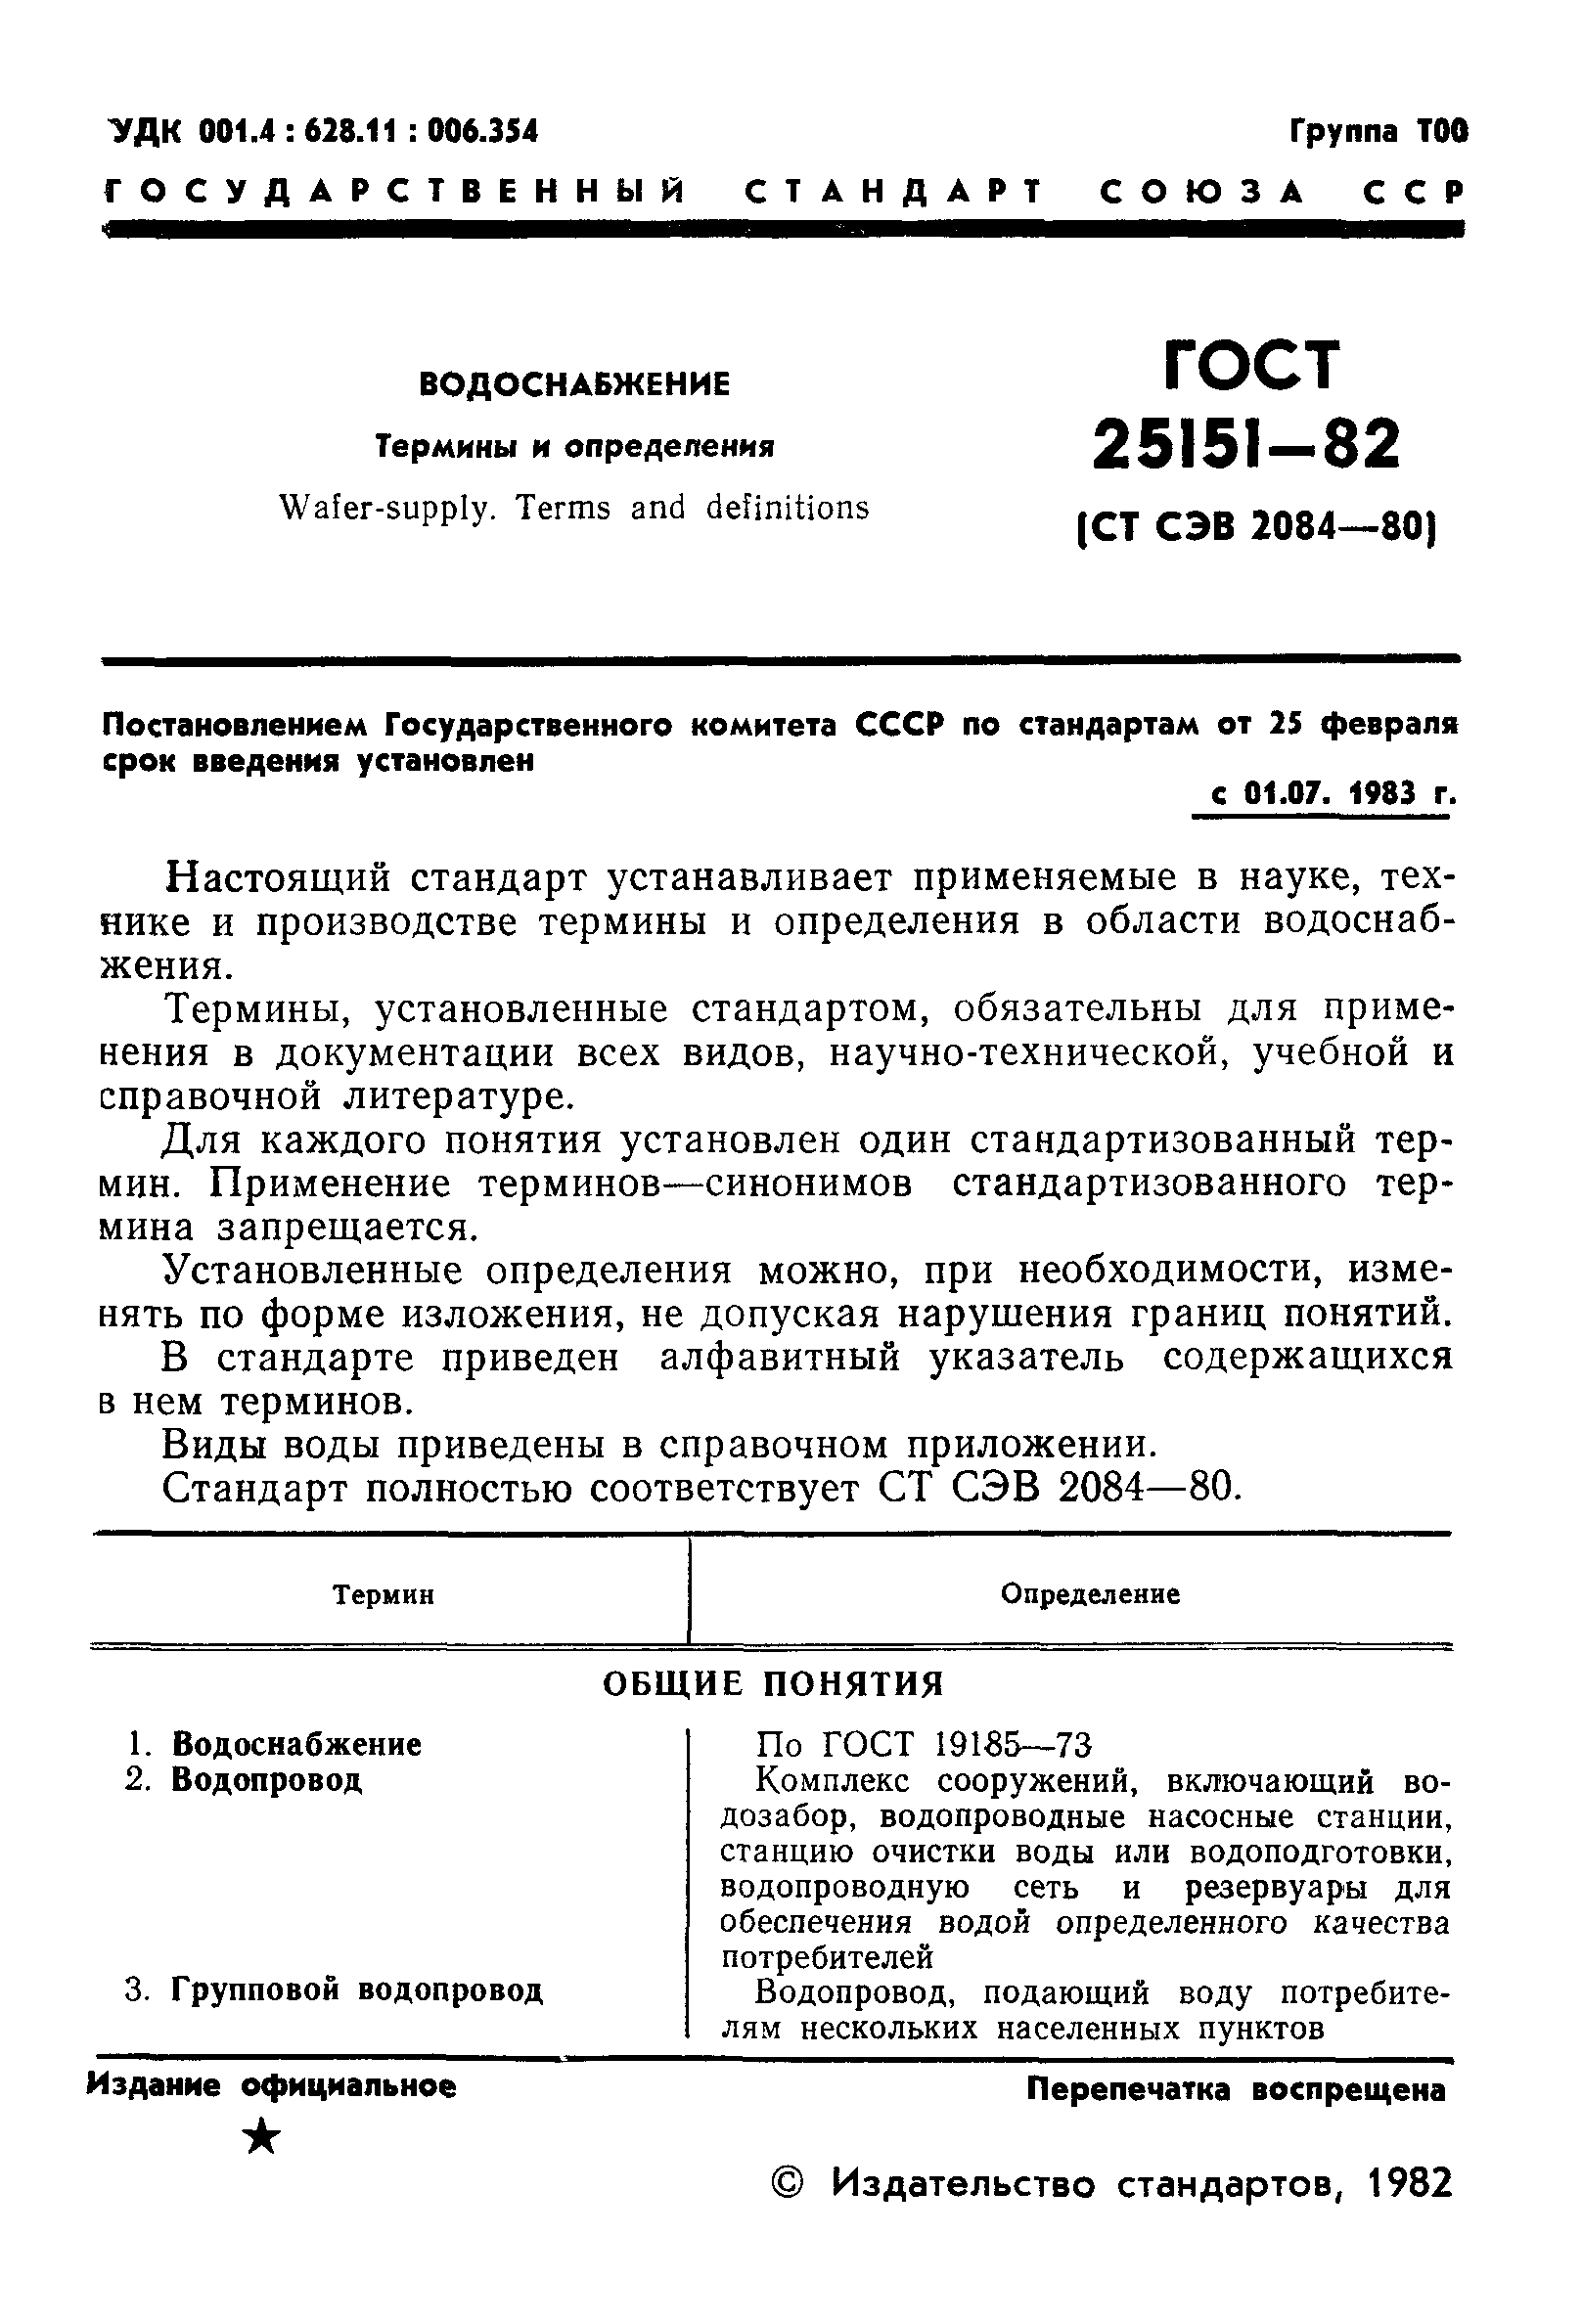 ГОСТ 25151-82